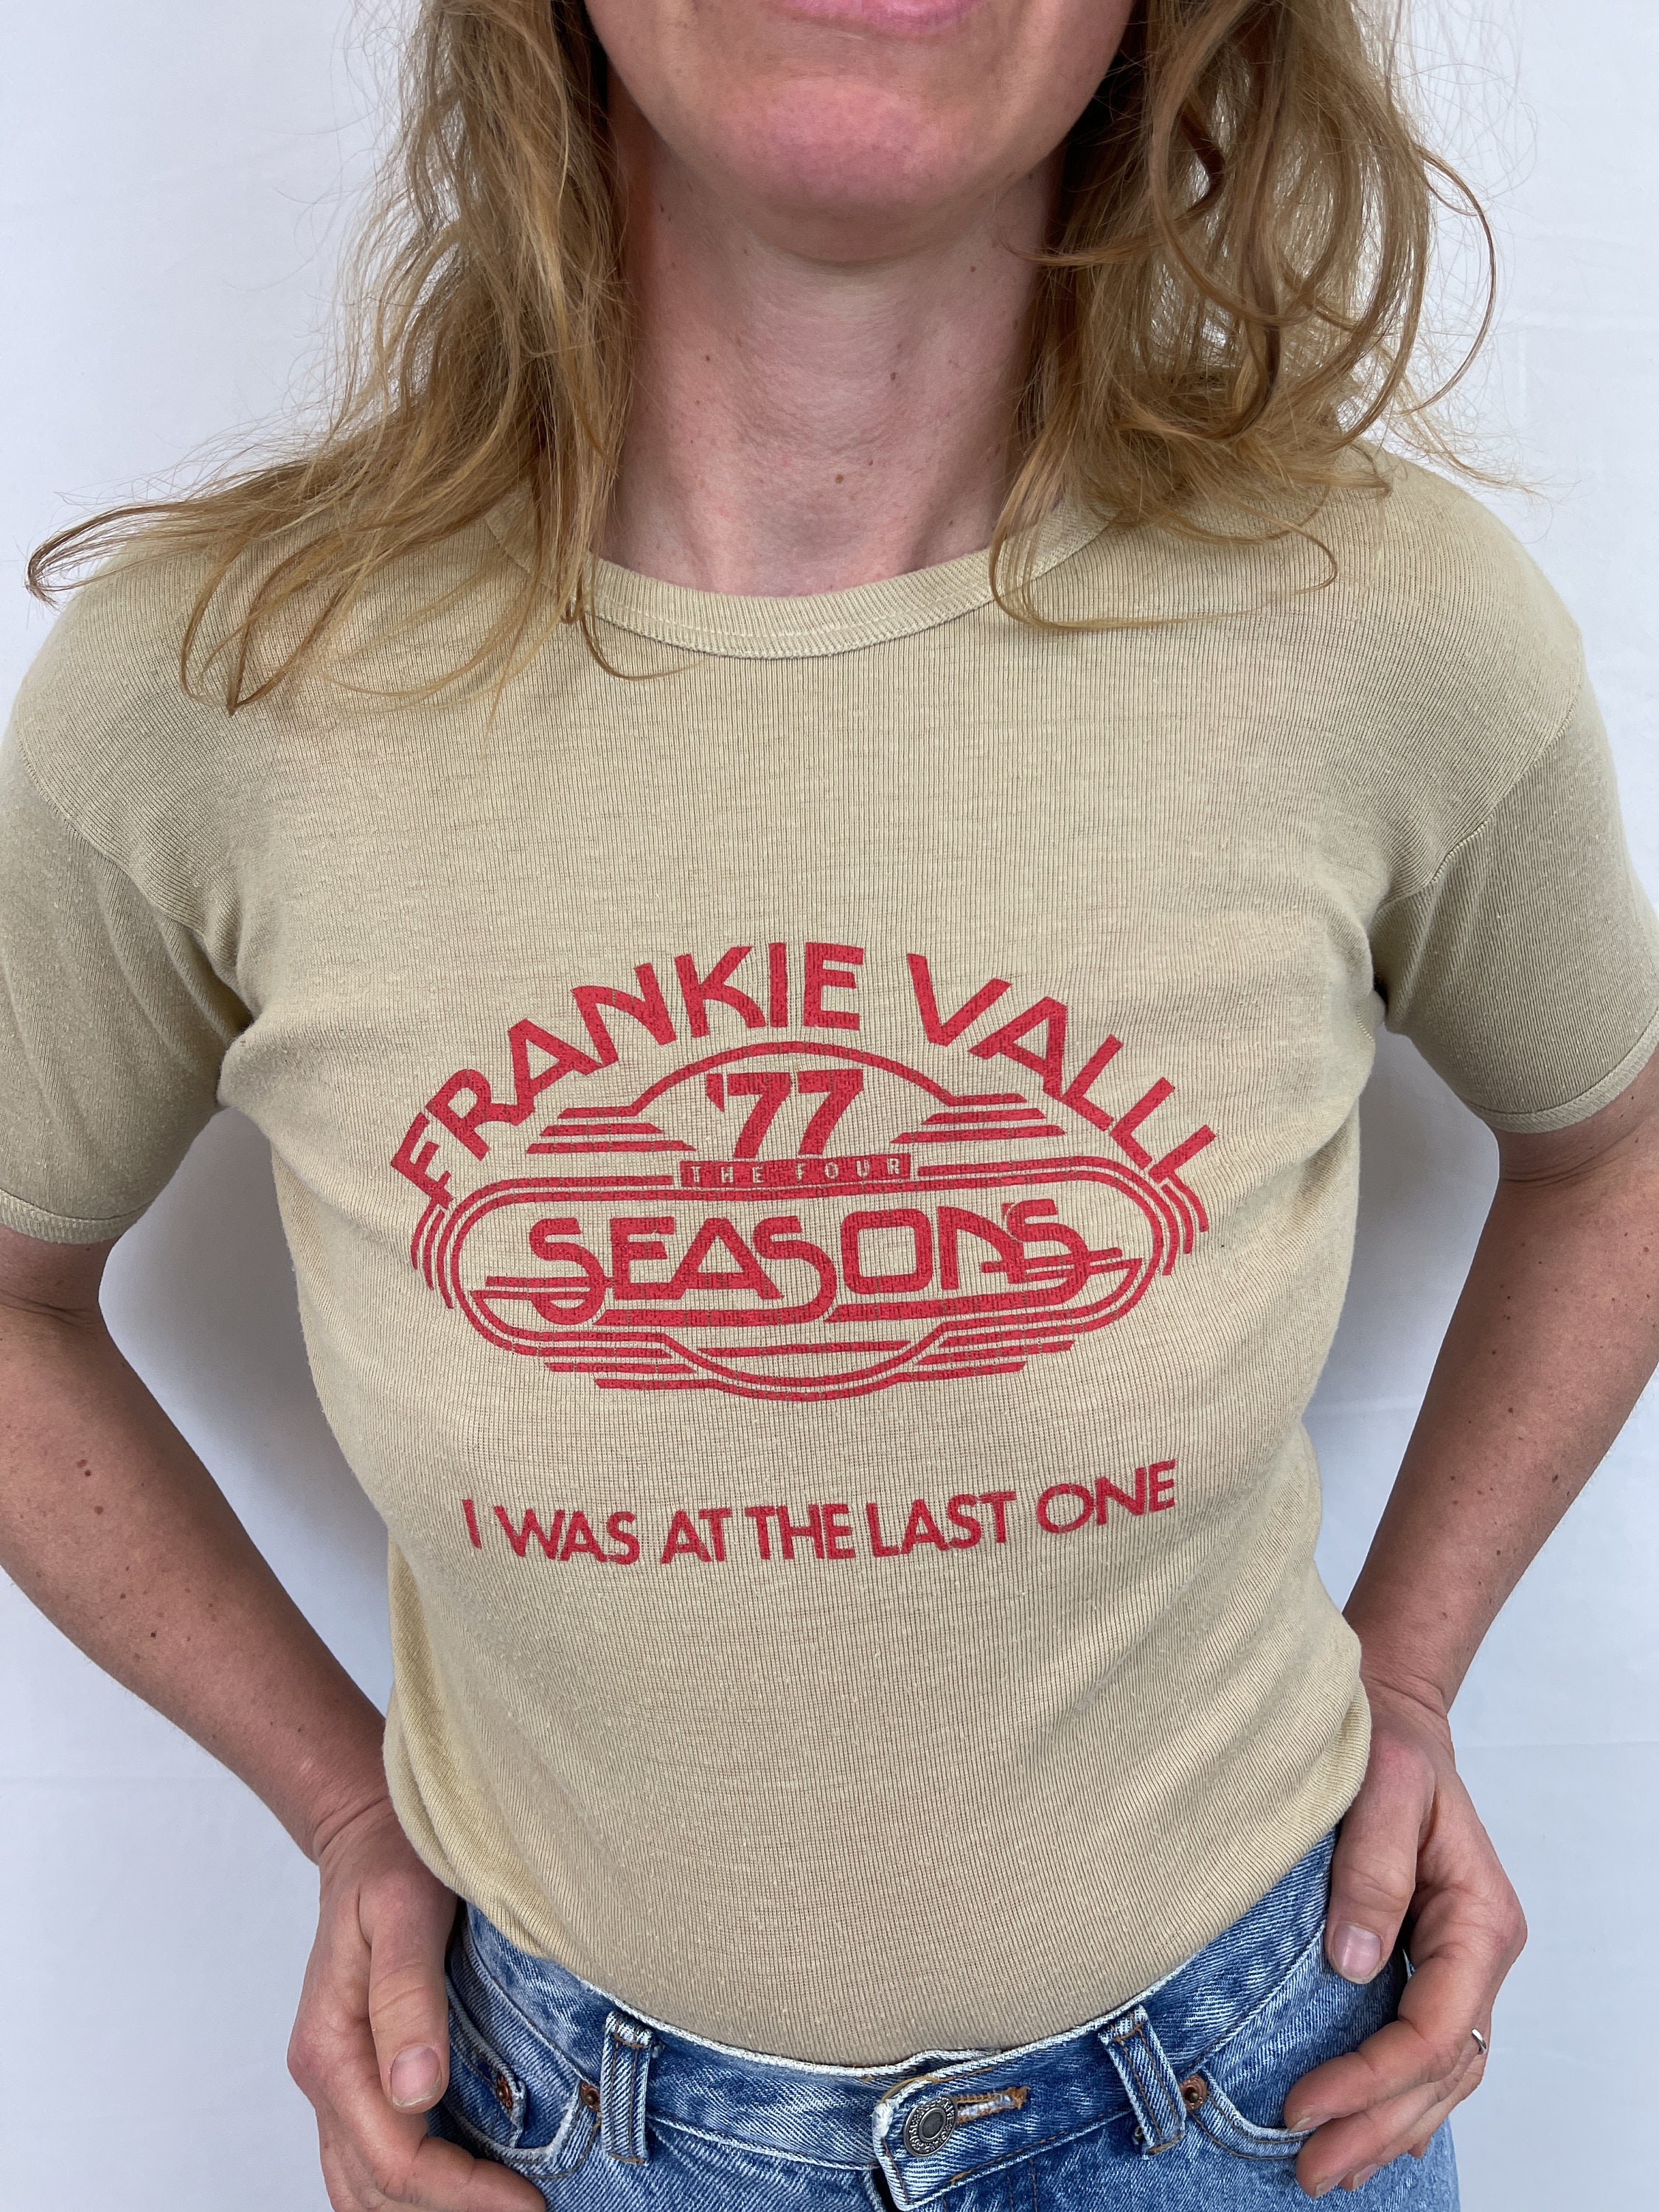 Kleding Gender-neutrale kleding volwassenen Tops & T-shirts Tanktops Vintage jaren 1970 70 1977 FRANKIE VALLI en de Four Seasons Vtg Concert Motown Tshirt T-shirt 